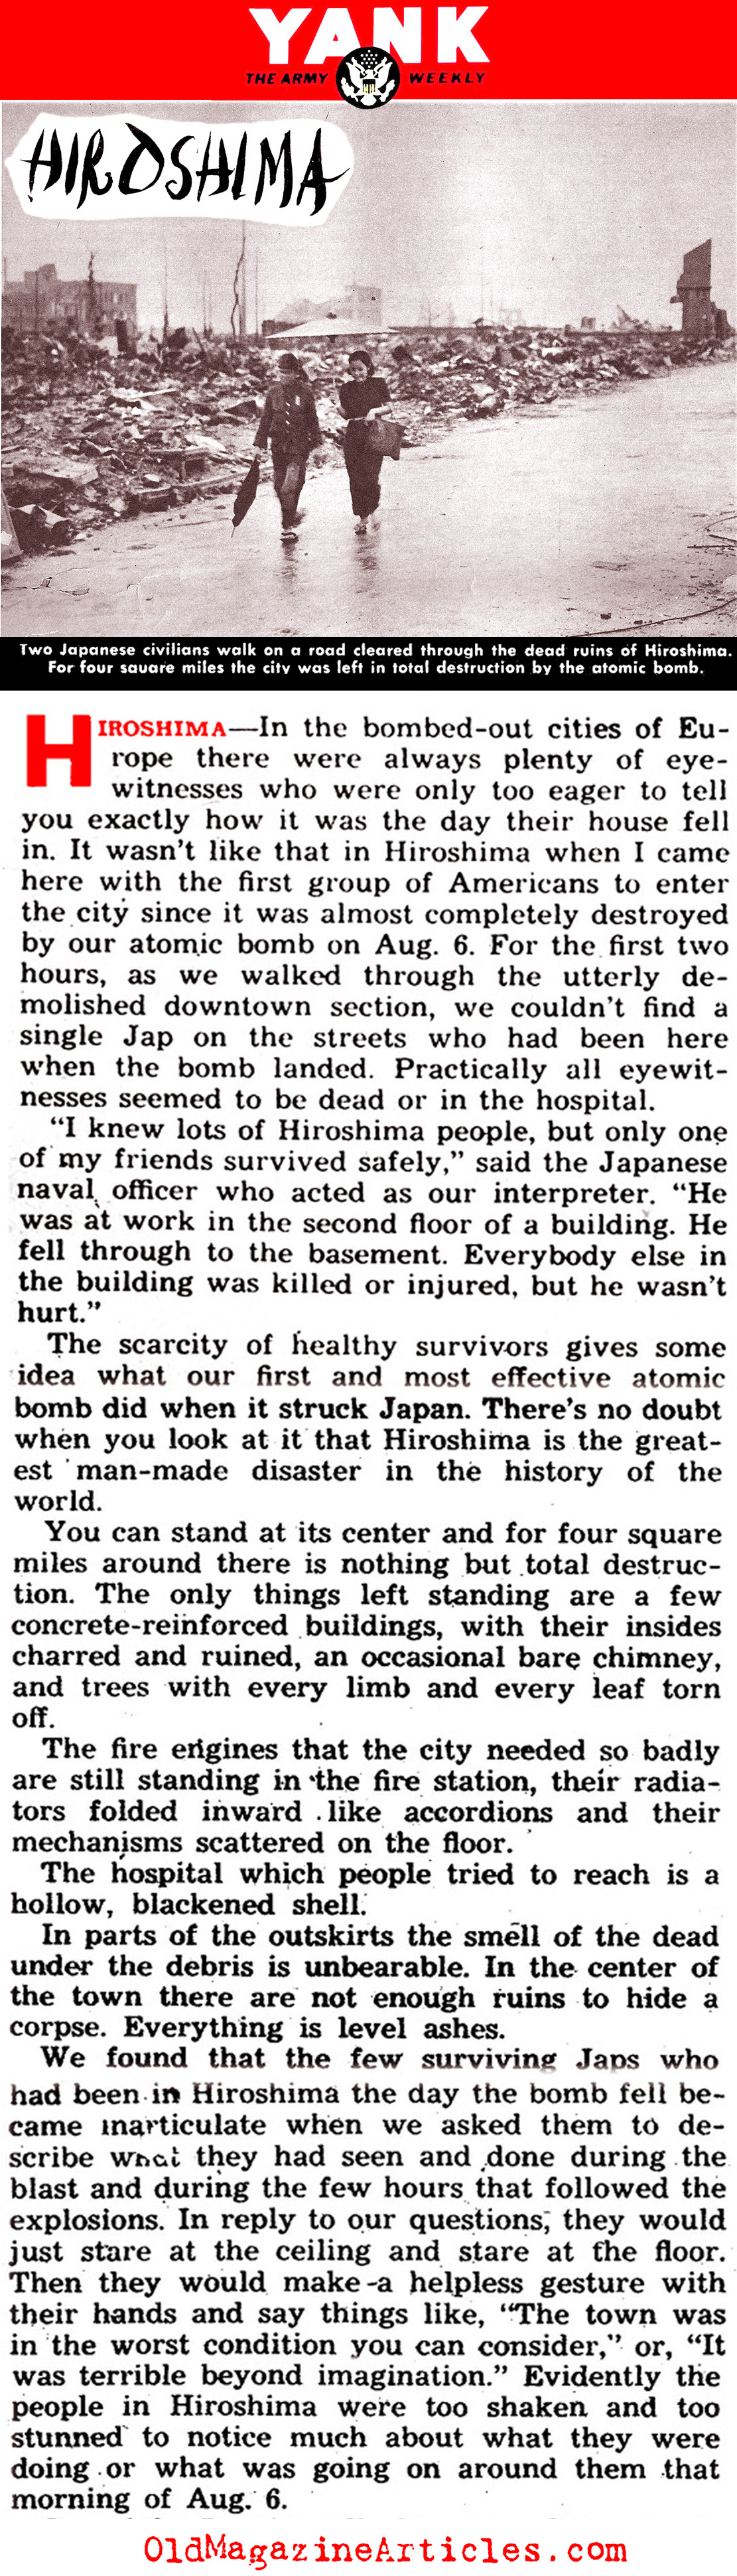 Hiroshima (Yank Magazine, 1945)